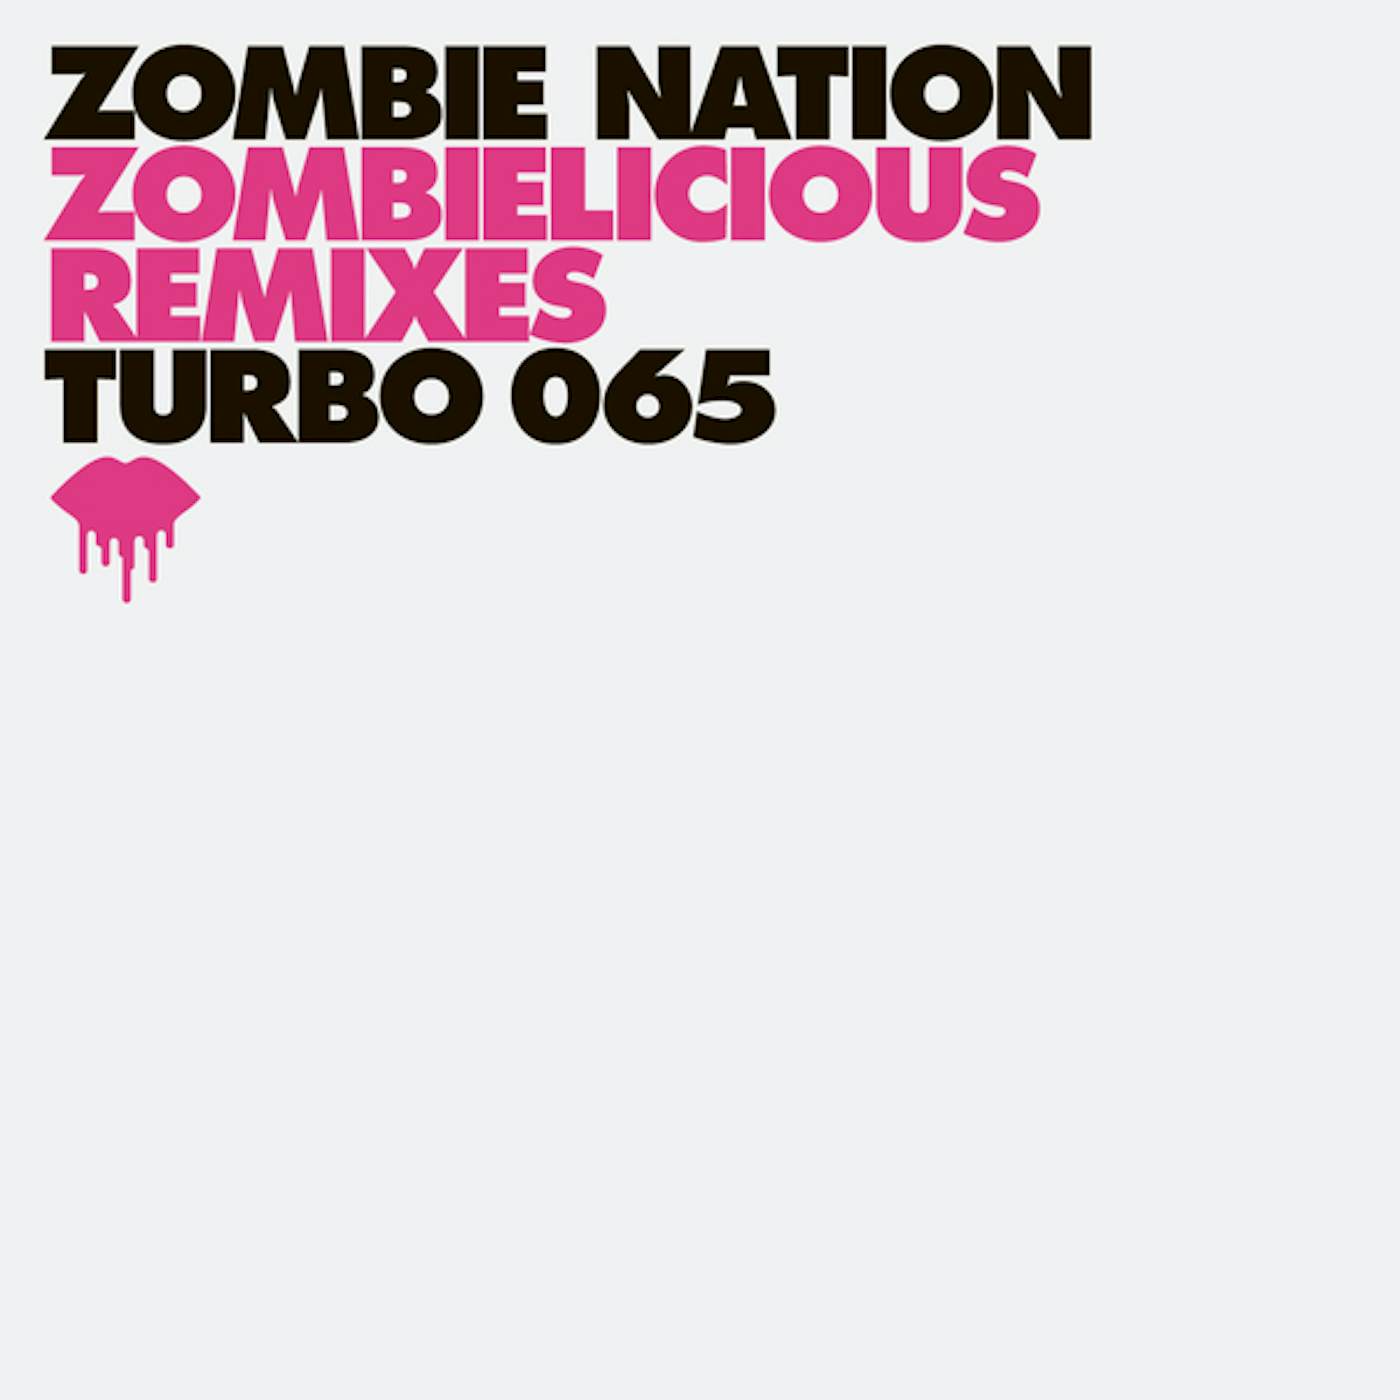 Zombie Nation Zombielicious Remixes Vinyl Record